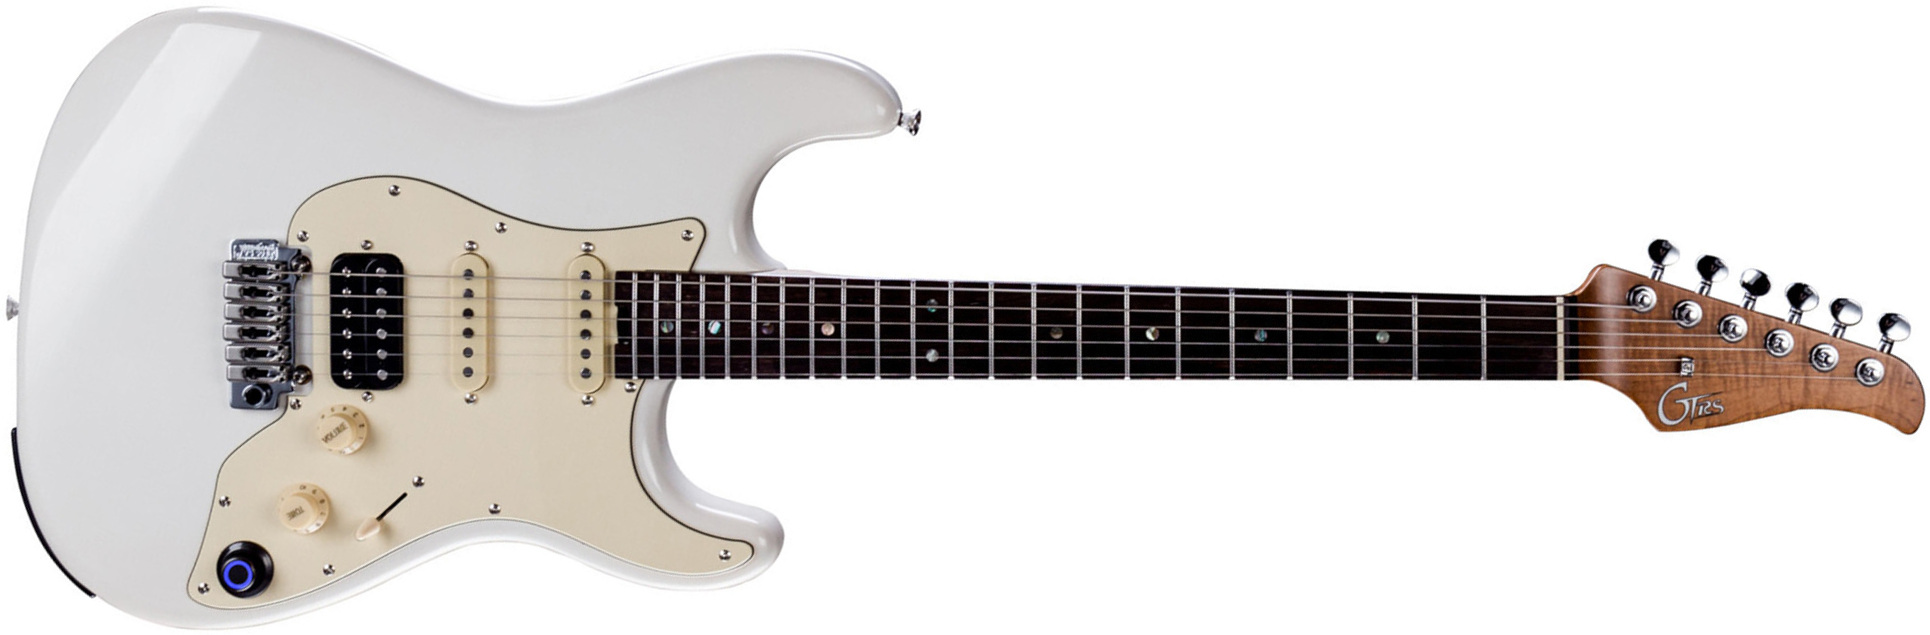 Mooer Gtrs P800 Pro Intelligent Guitar Hss Trem Rw - Olympic White - MIDI / Digital elektrische gitaar - Main picture